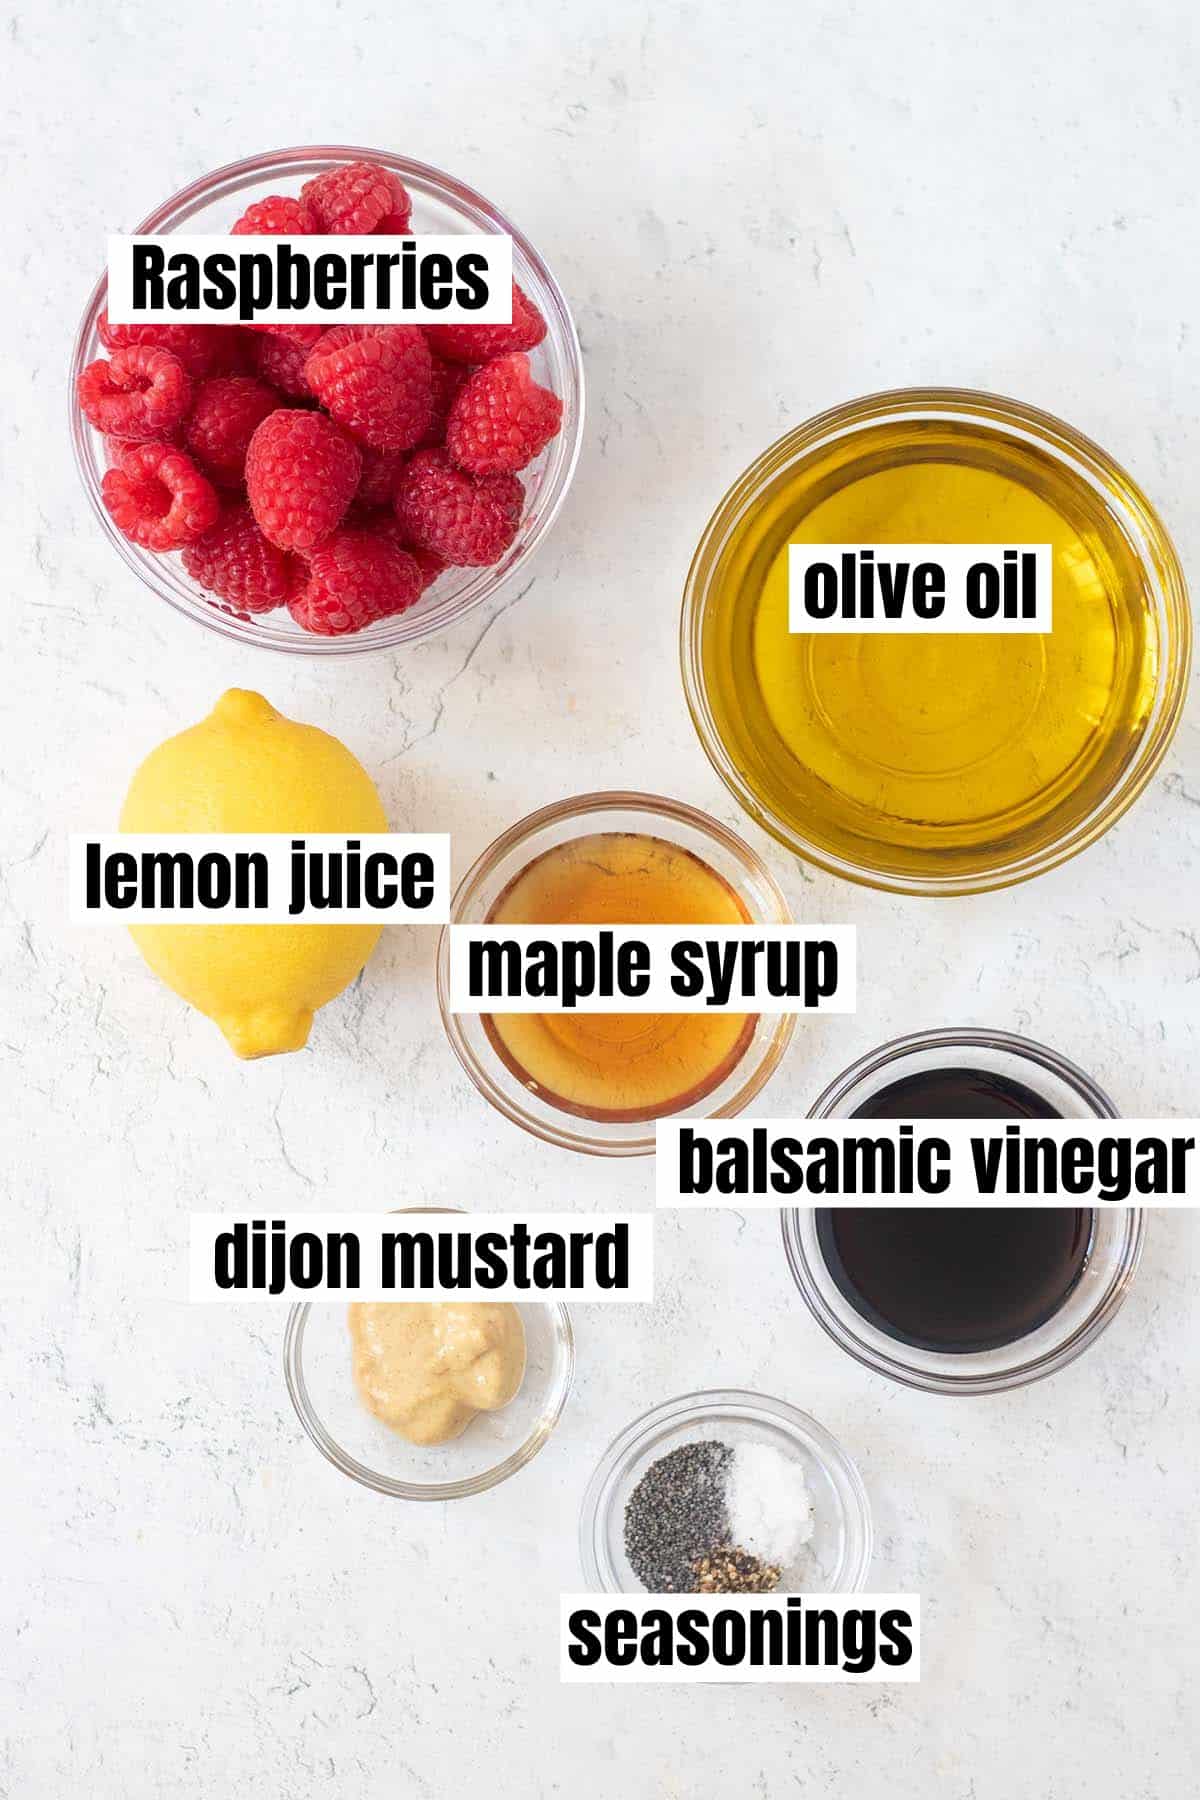 ingredients for raspberry vinaigrette which include raspberries, olive oil, lemon juice, maple syrup, balsamic vinegar, dijon mustard and seasonings